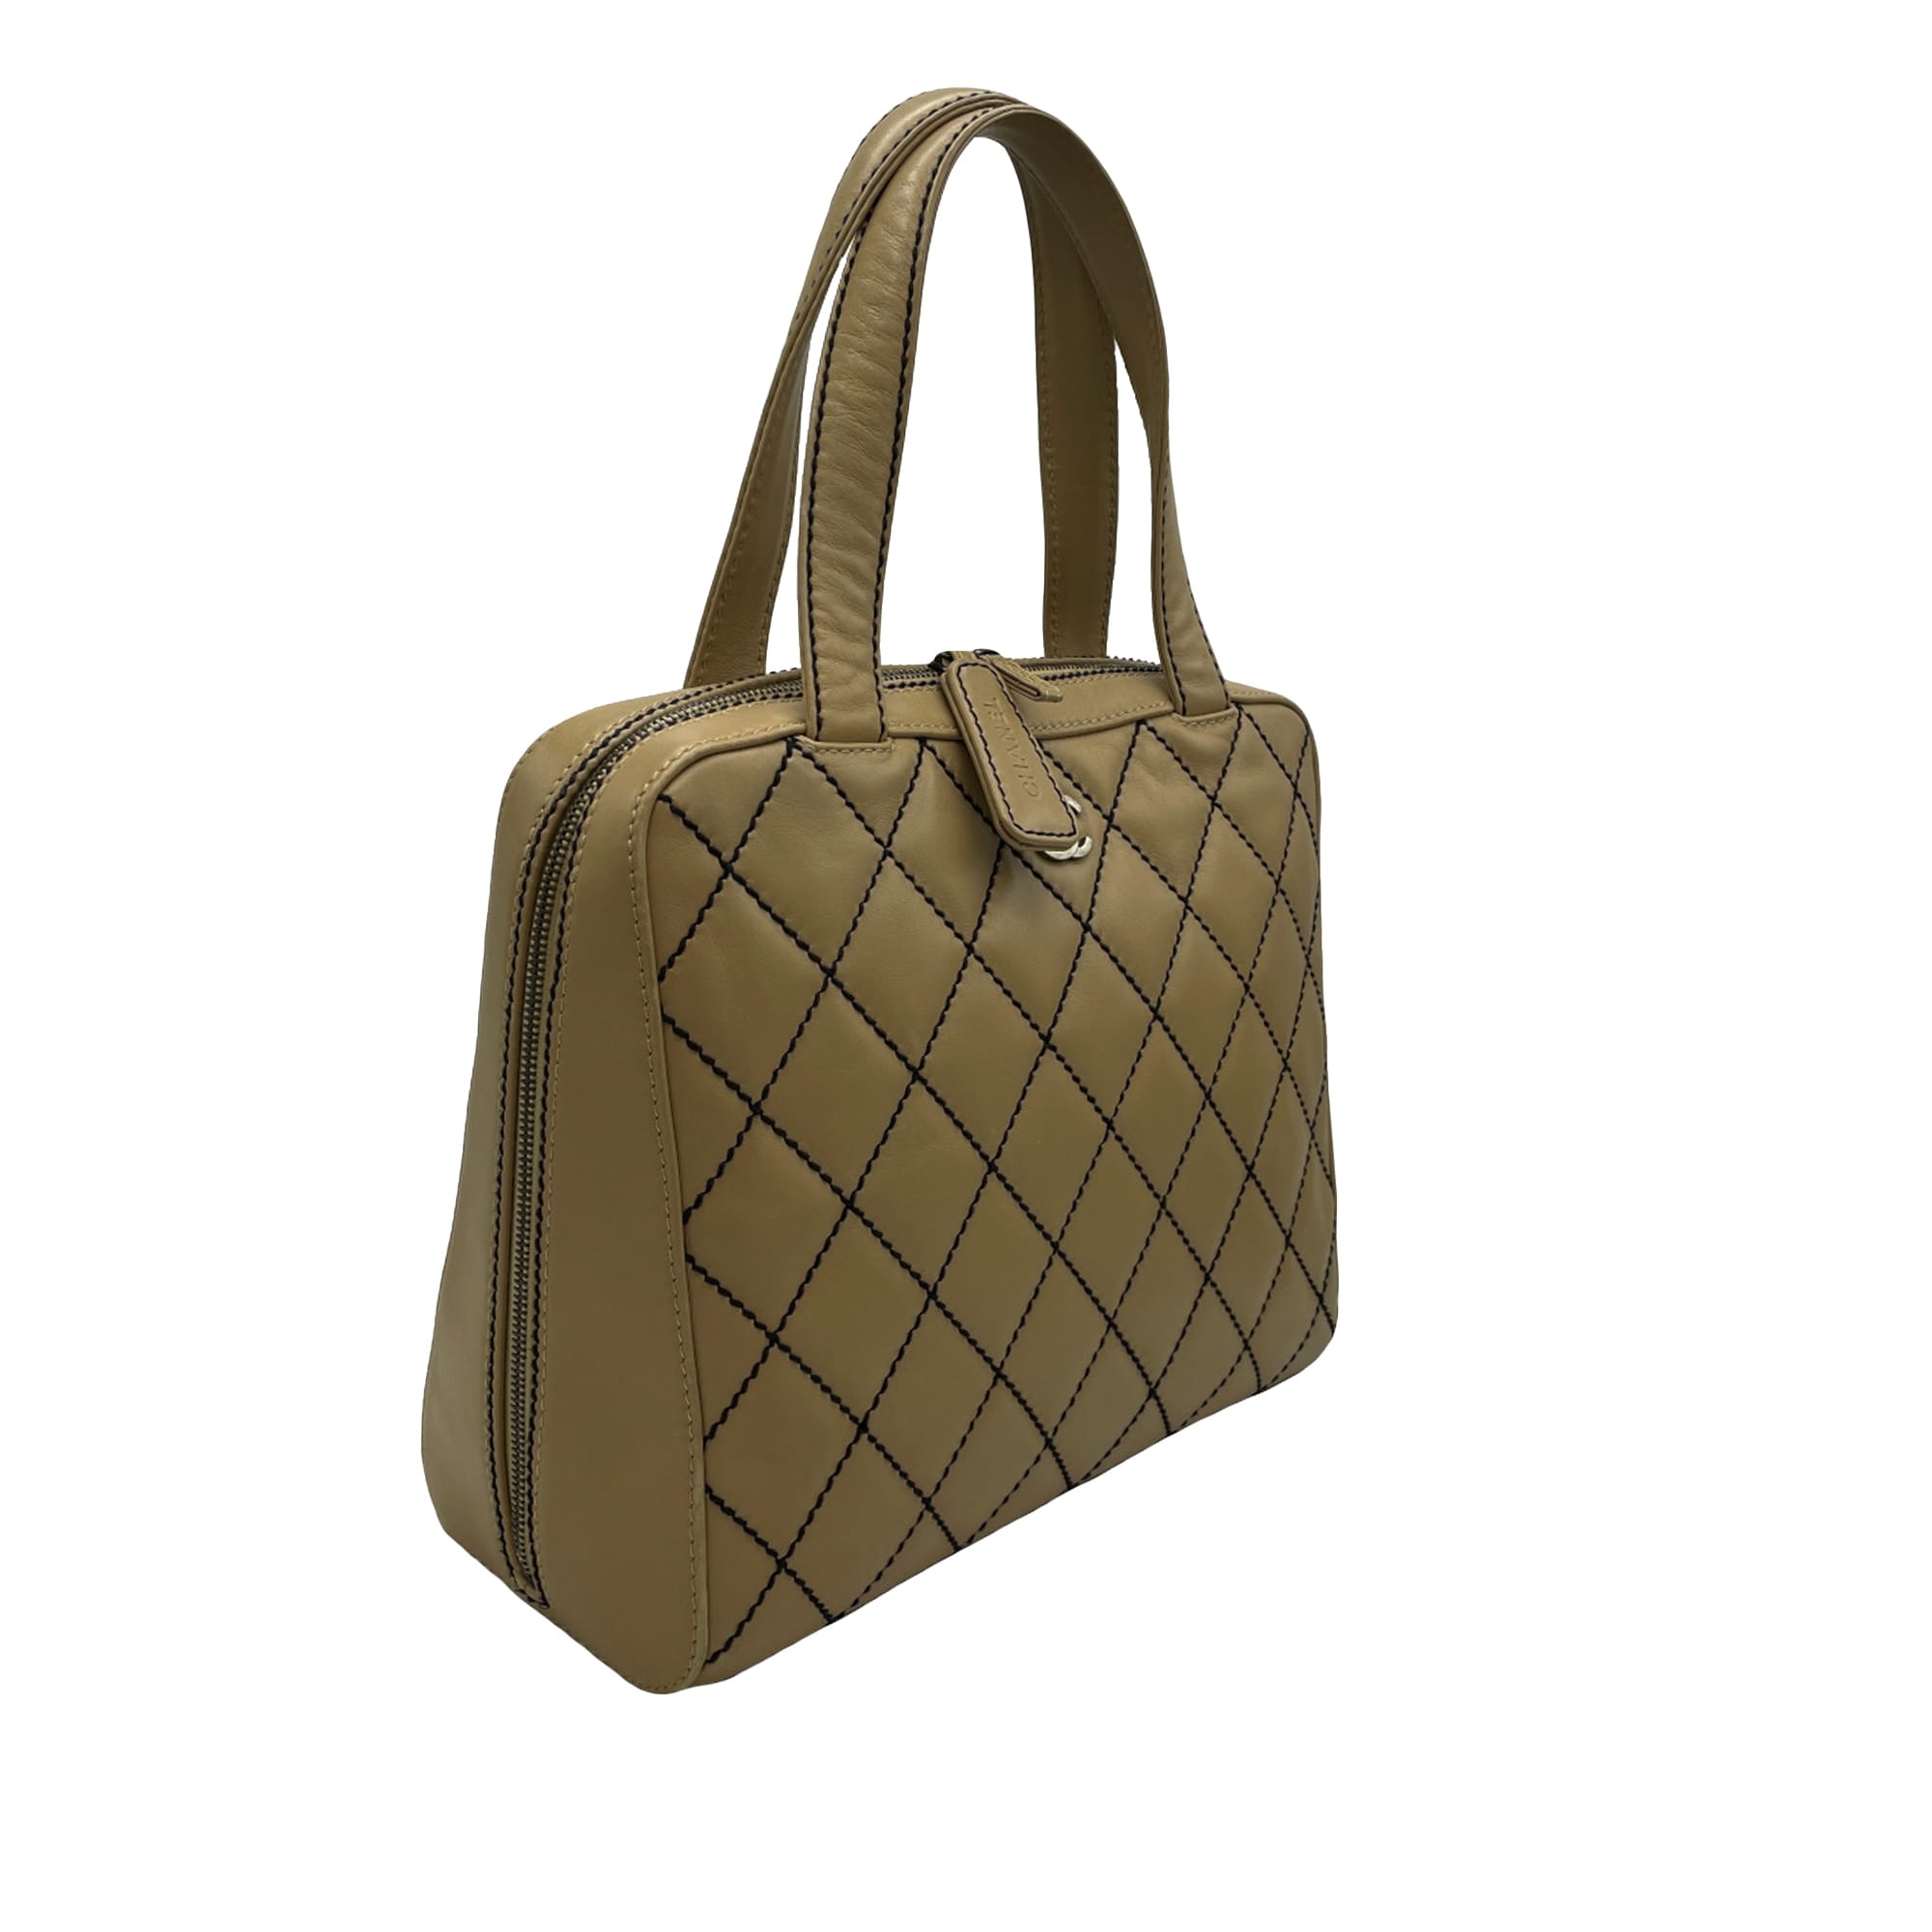 Chanel Cc Wild Stitch Handbag, ONESIZE